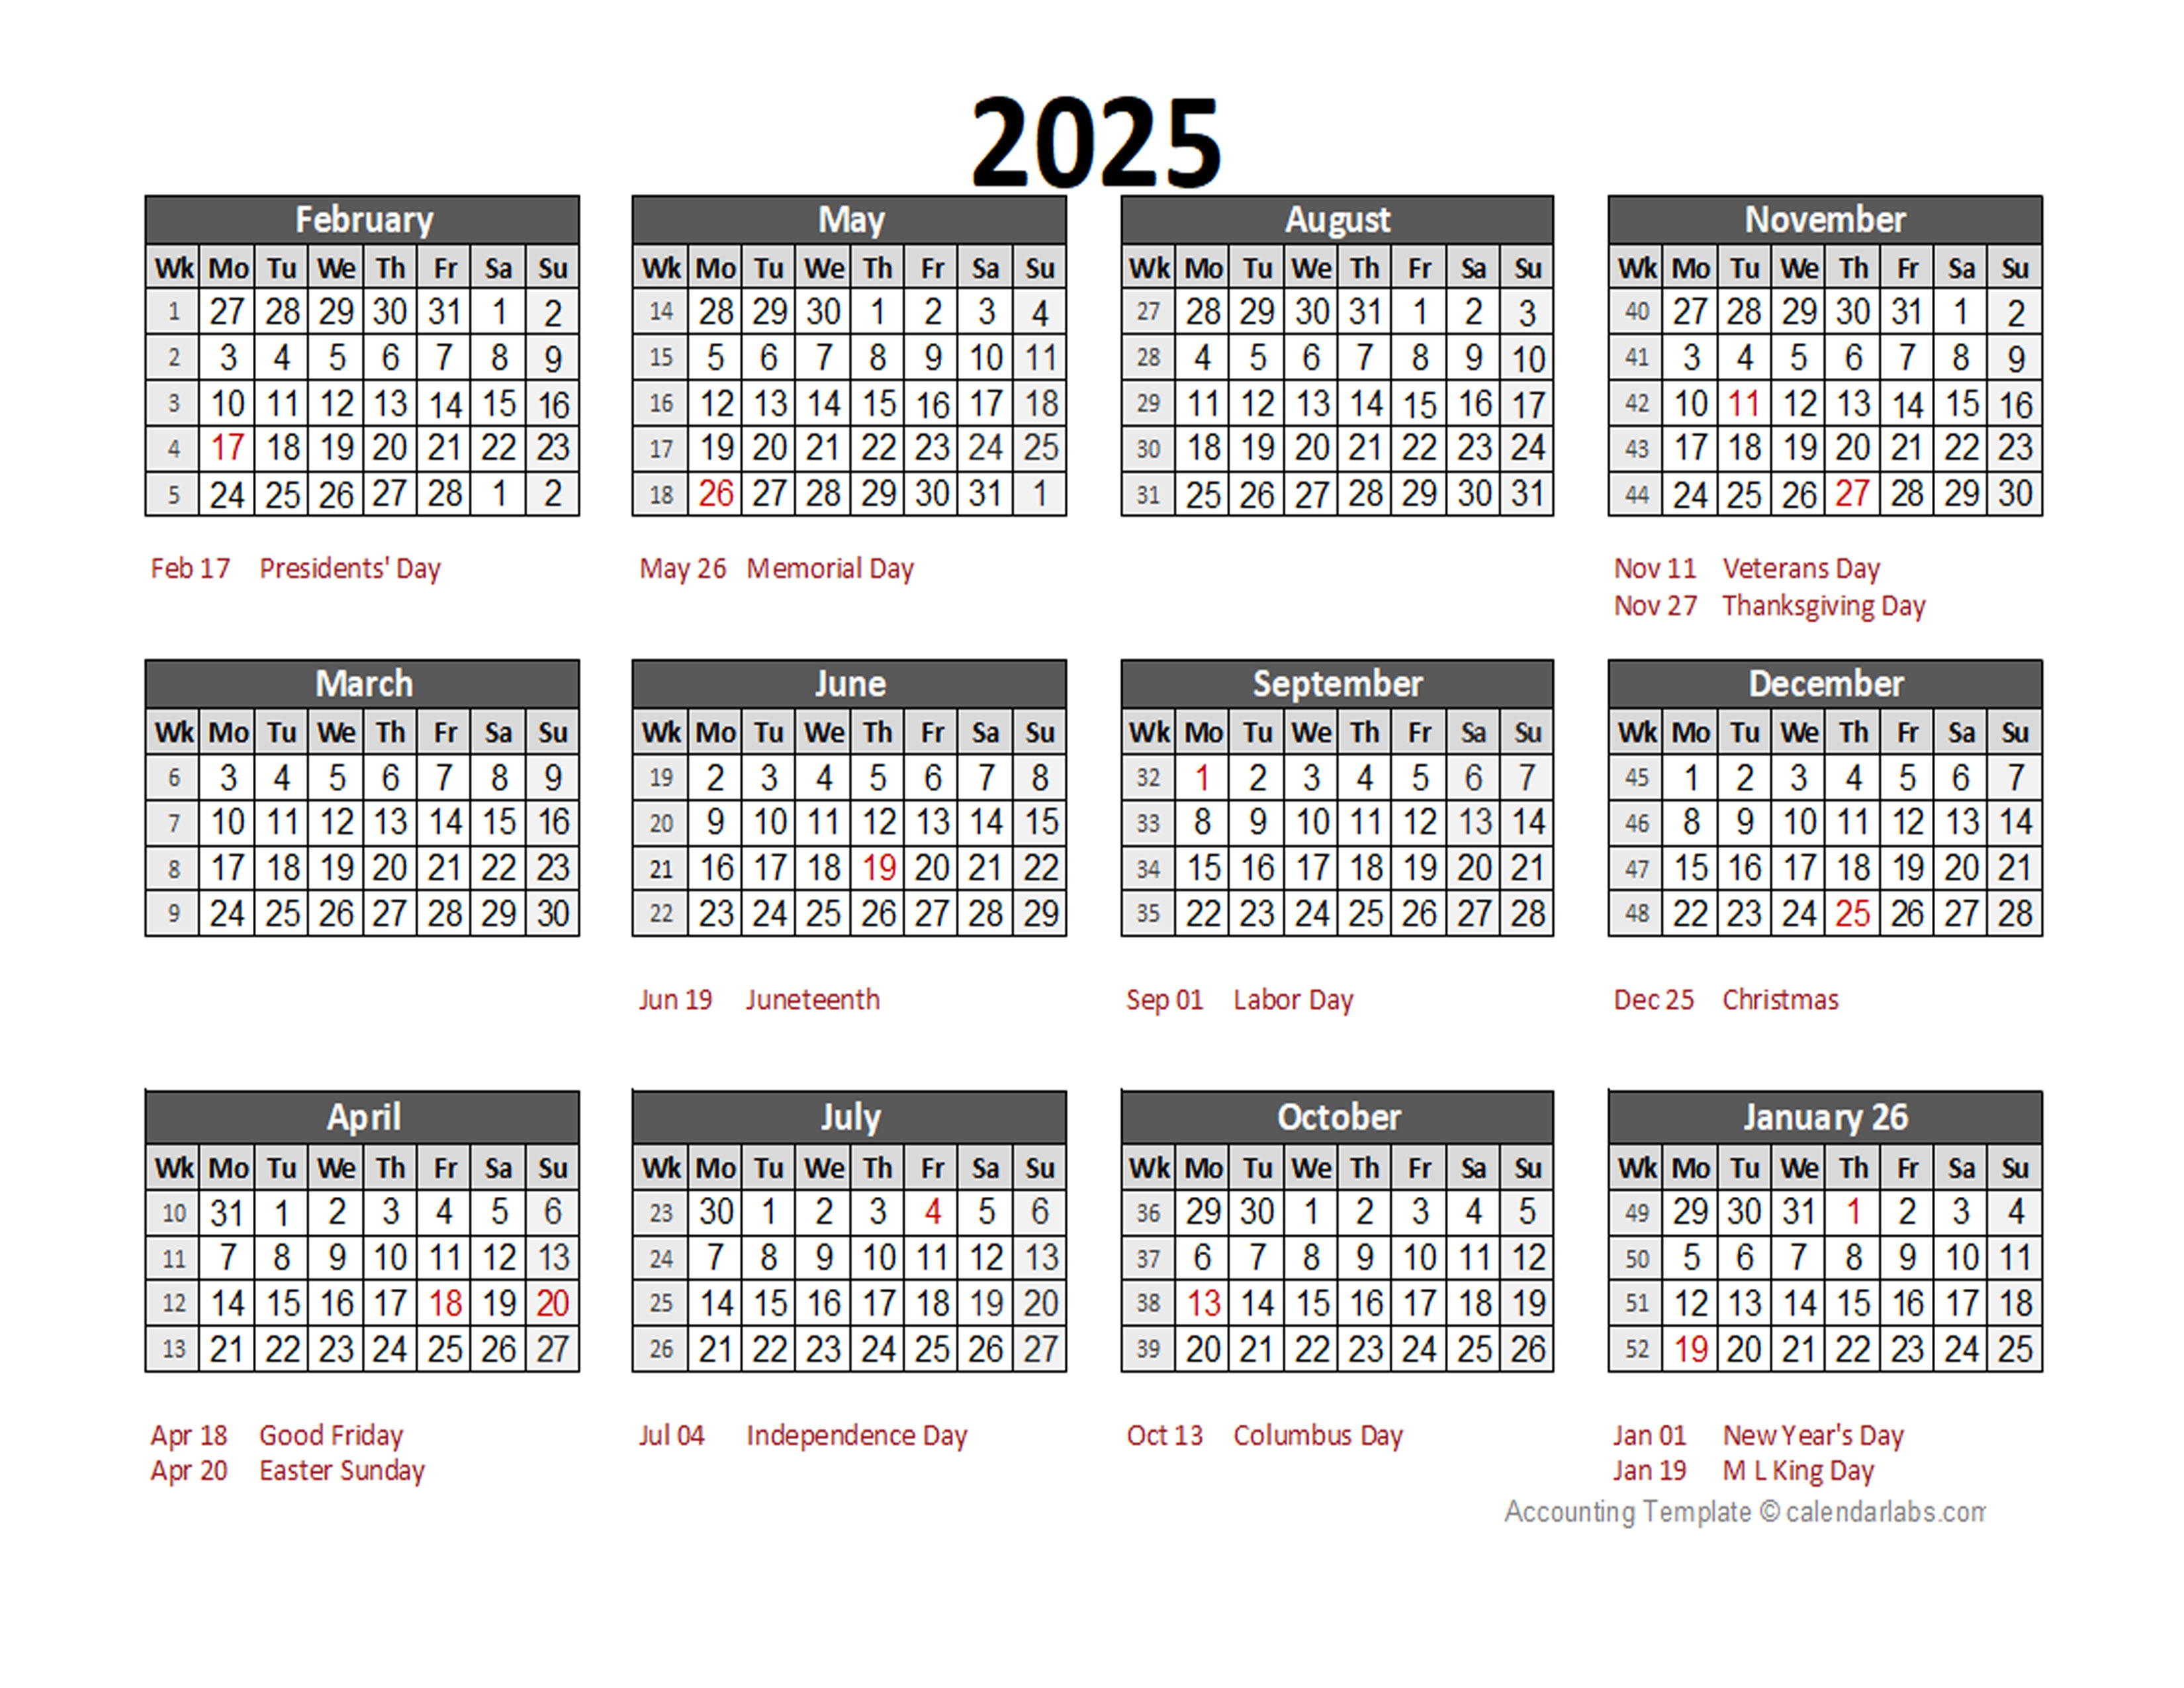 2025 Accounting Calendar 5-4-4 - Free Printable Templates